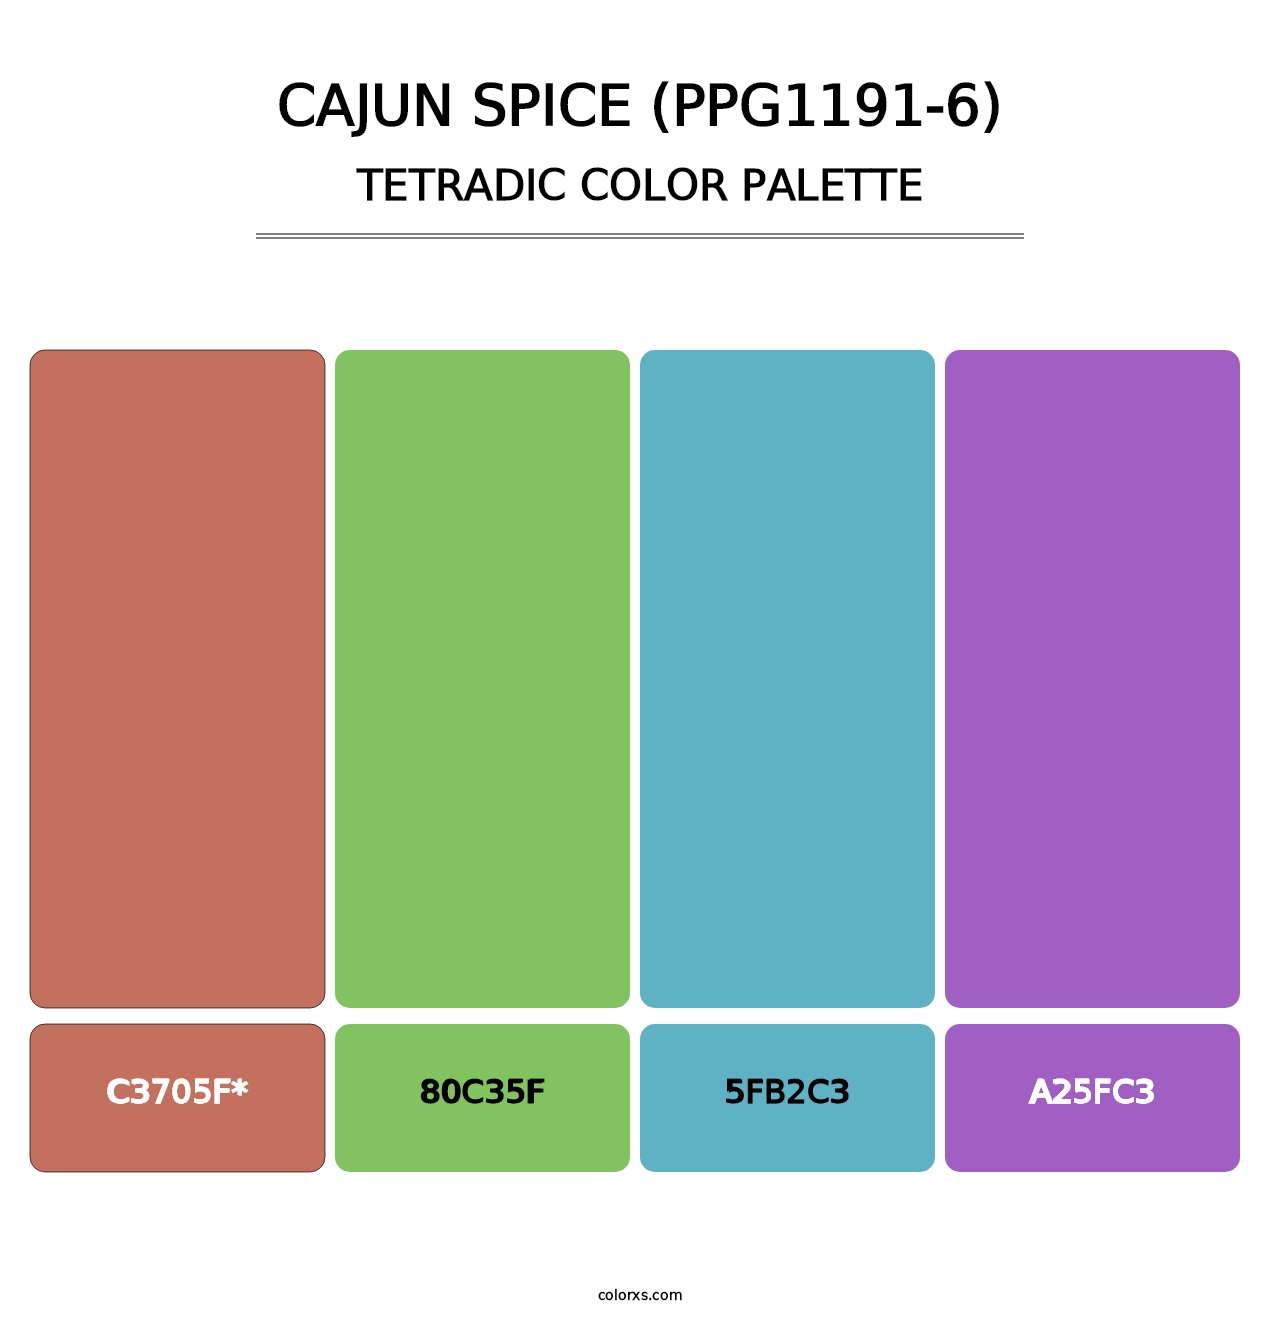 Cajun Spice (PPG1191-6) - Tetradic Color Palette